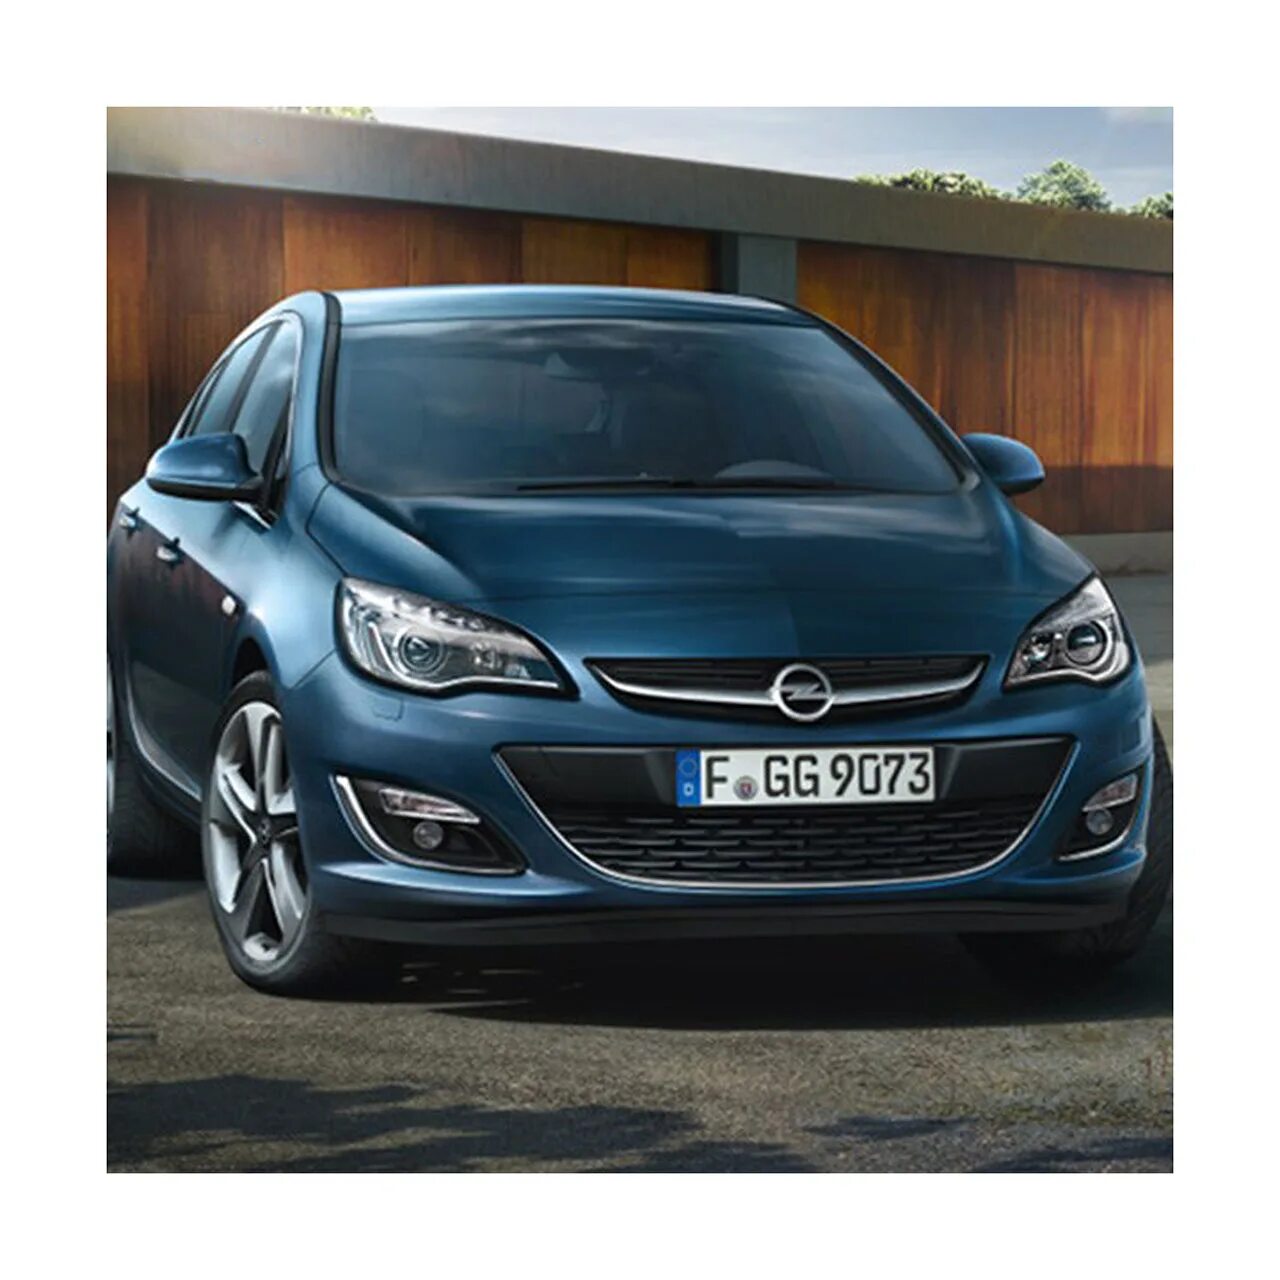 Opel Astra 6. Opel Astra g 2014. Купить опель нижний новгород